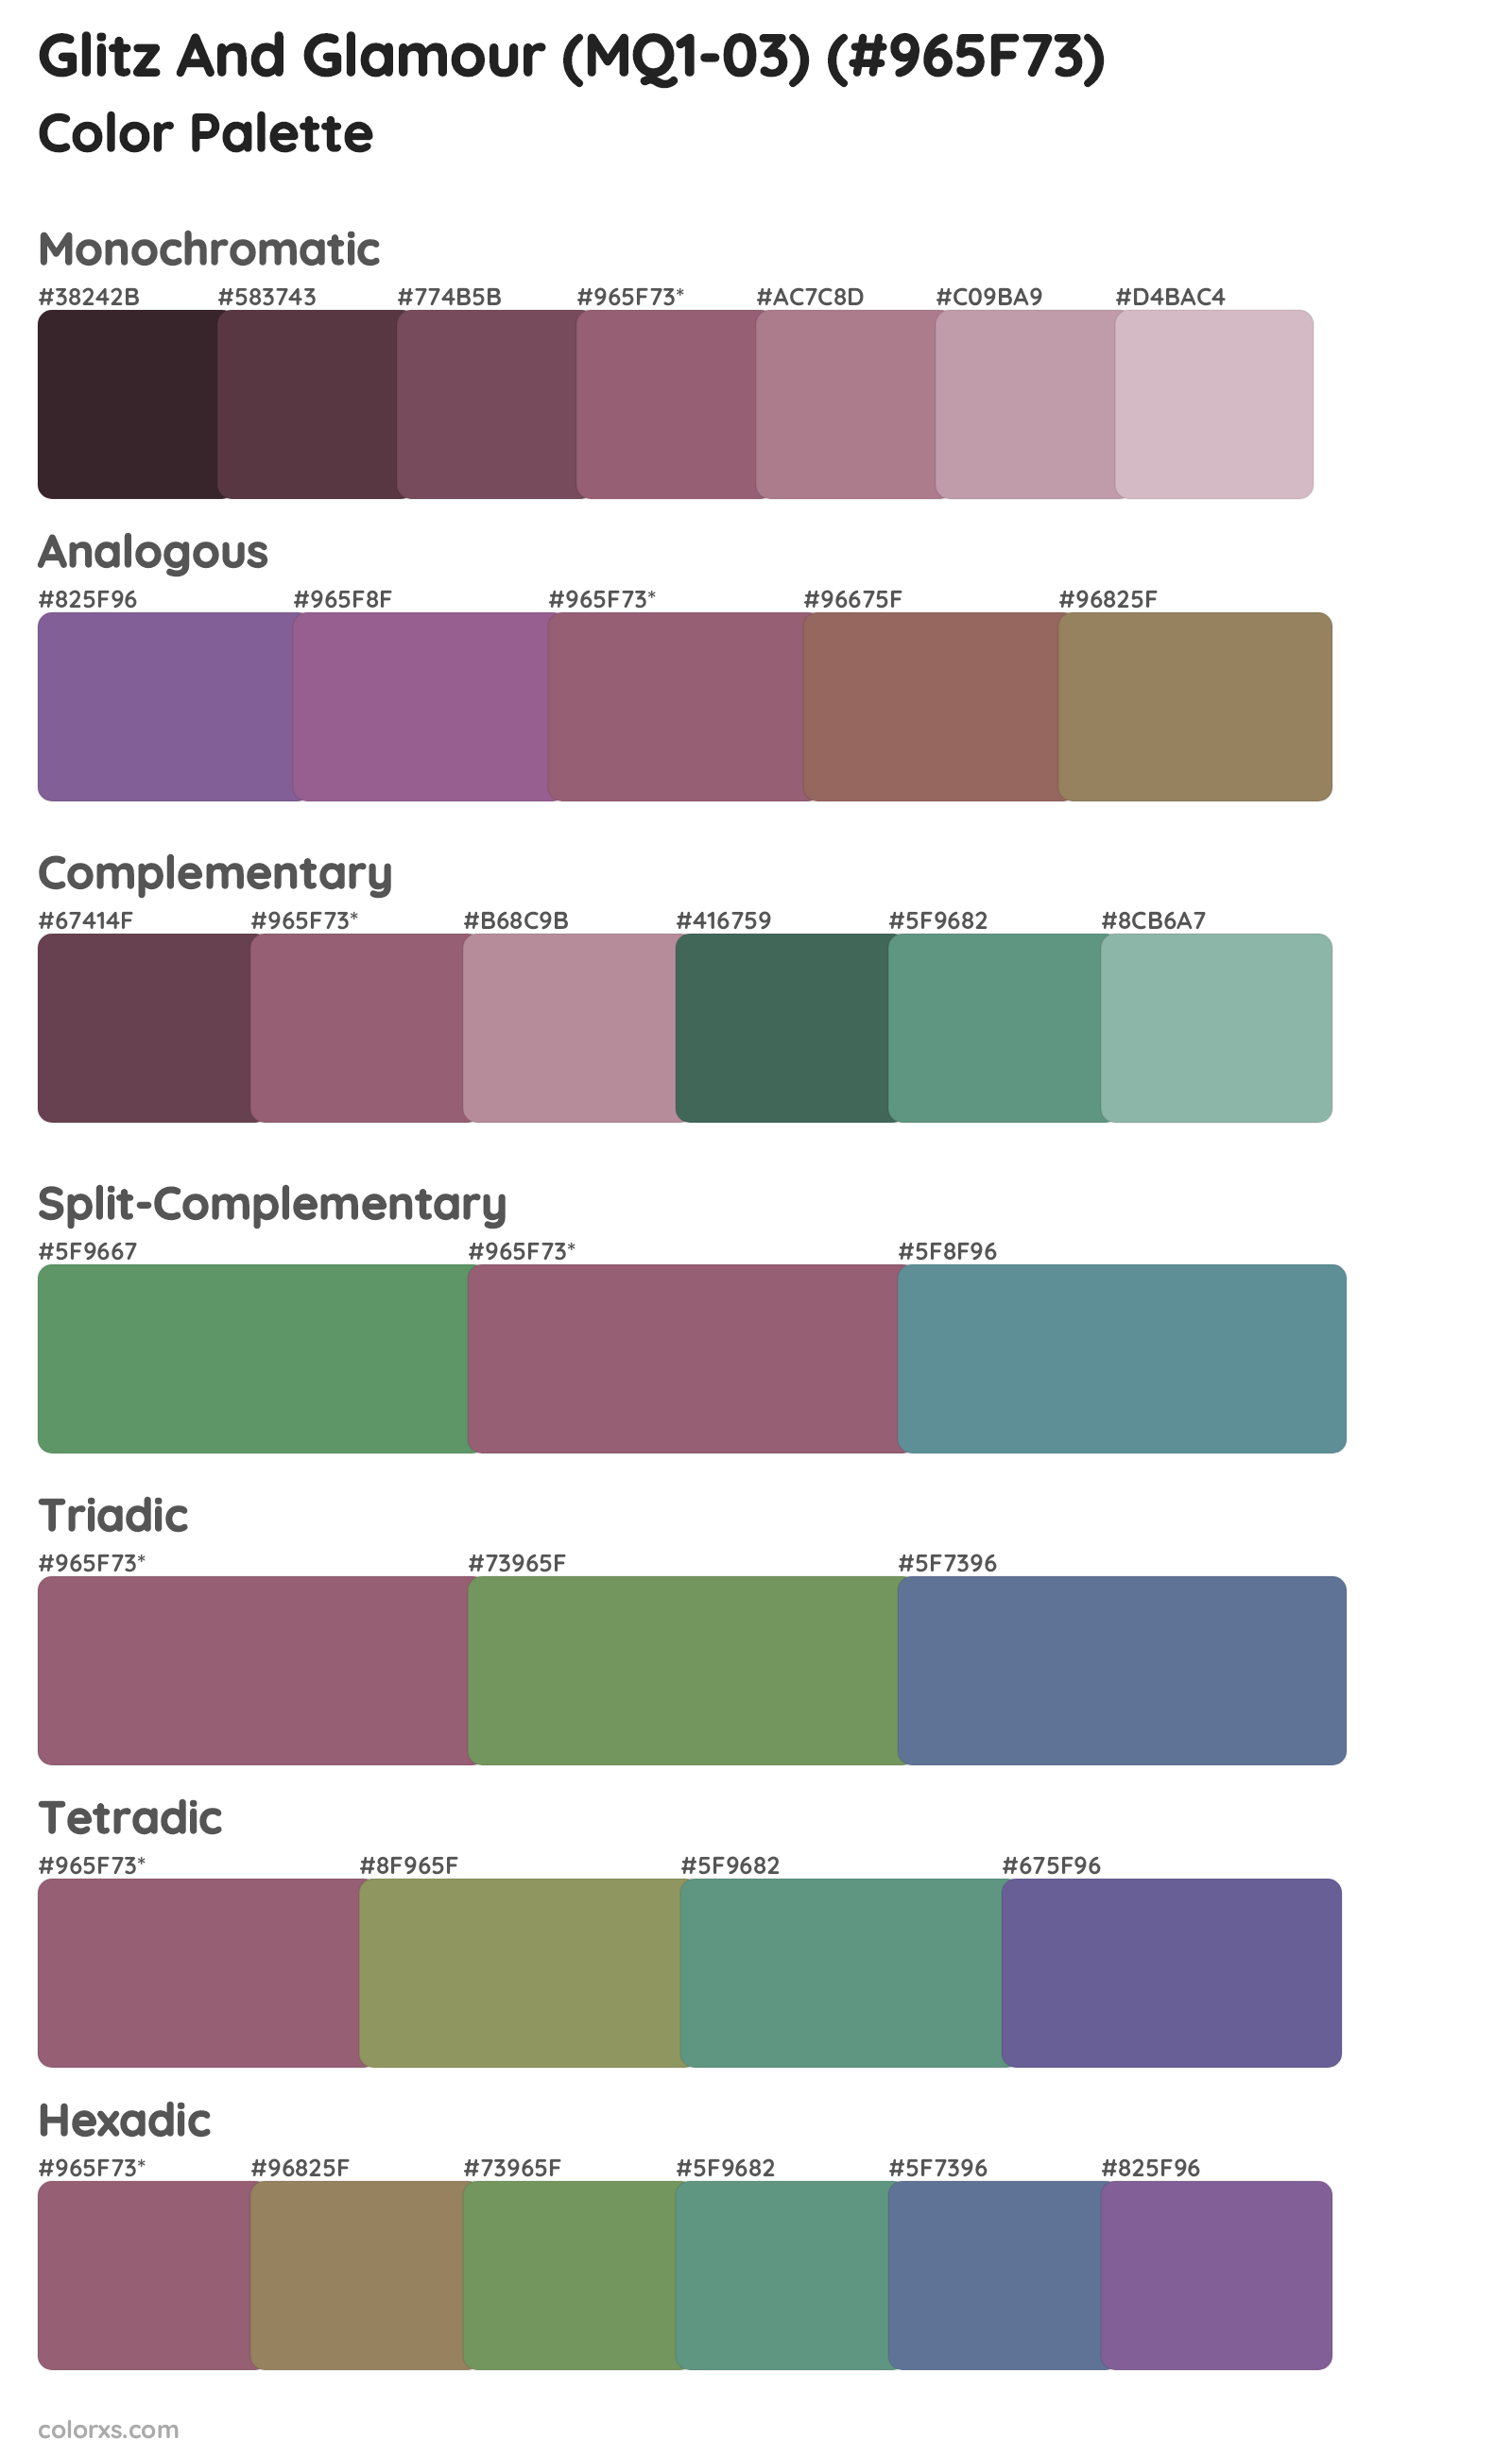 Glitz And Glamour (MQ1-03) Color Scheme Palettes